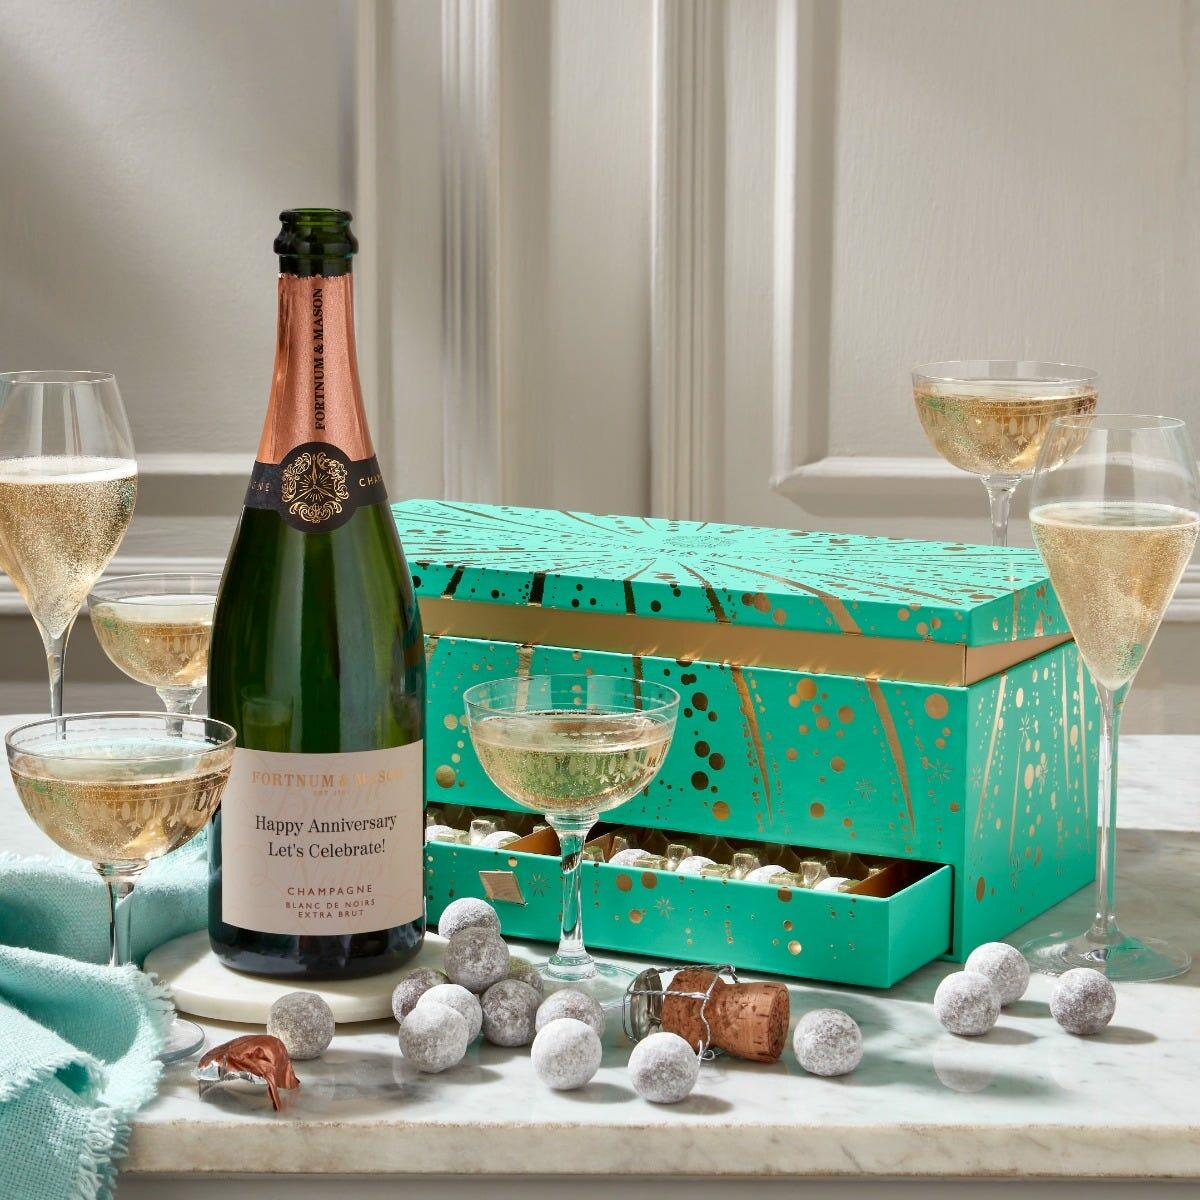 The Personalised Champagne & Chocolate Gift Box, Fortnum & Mason